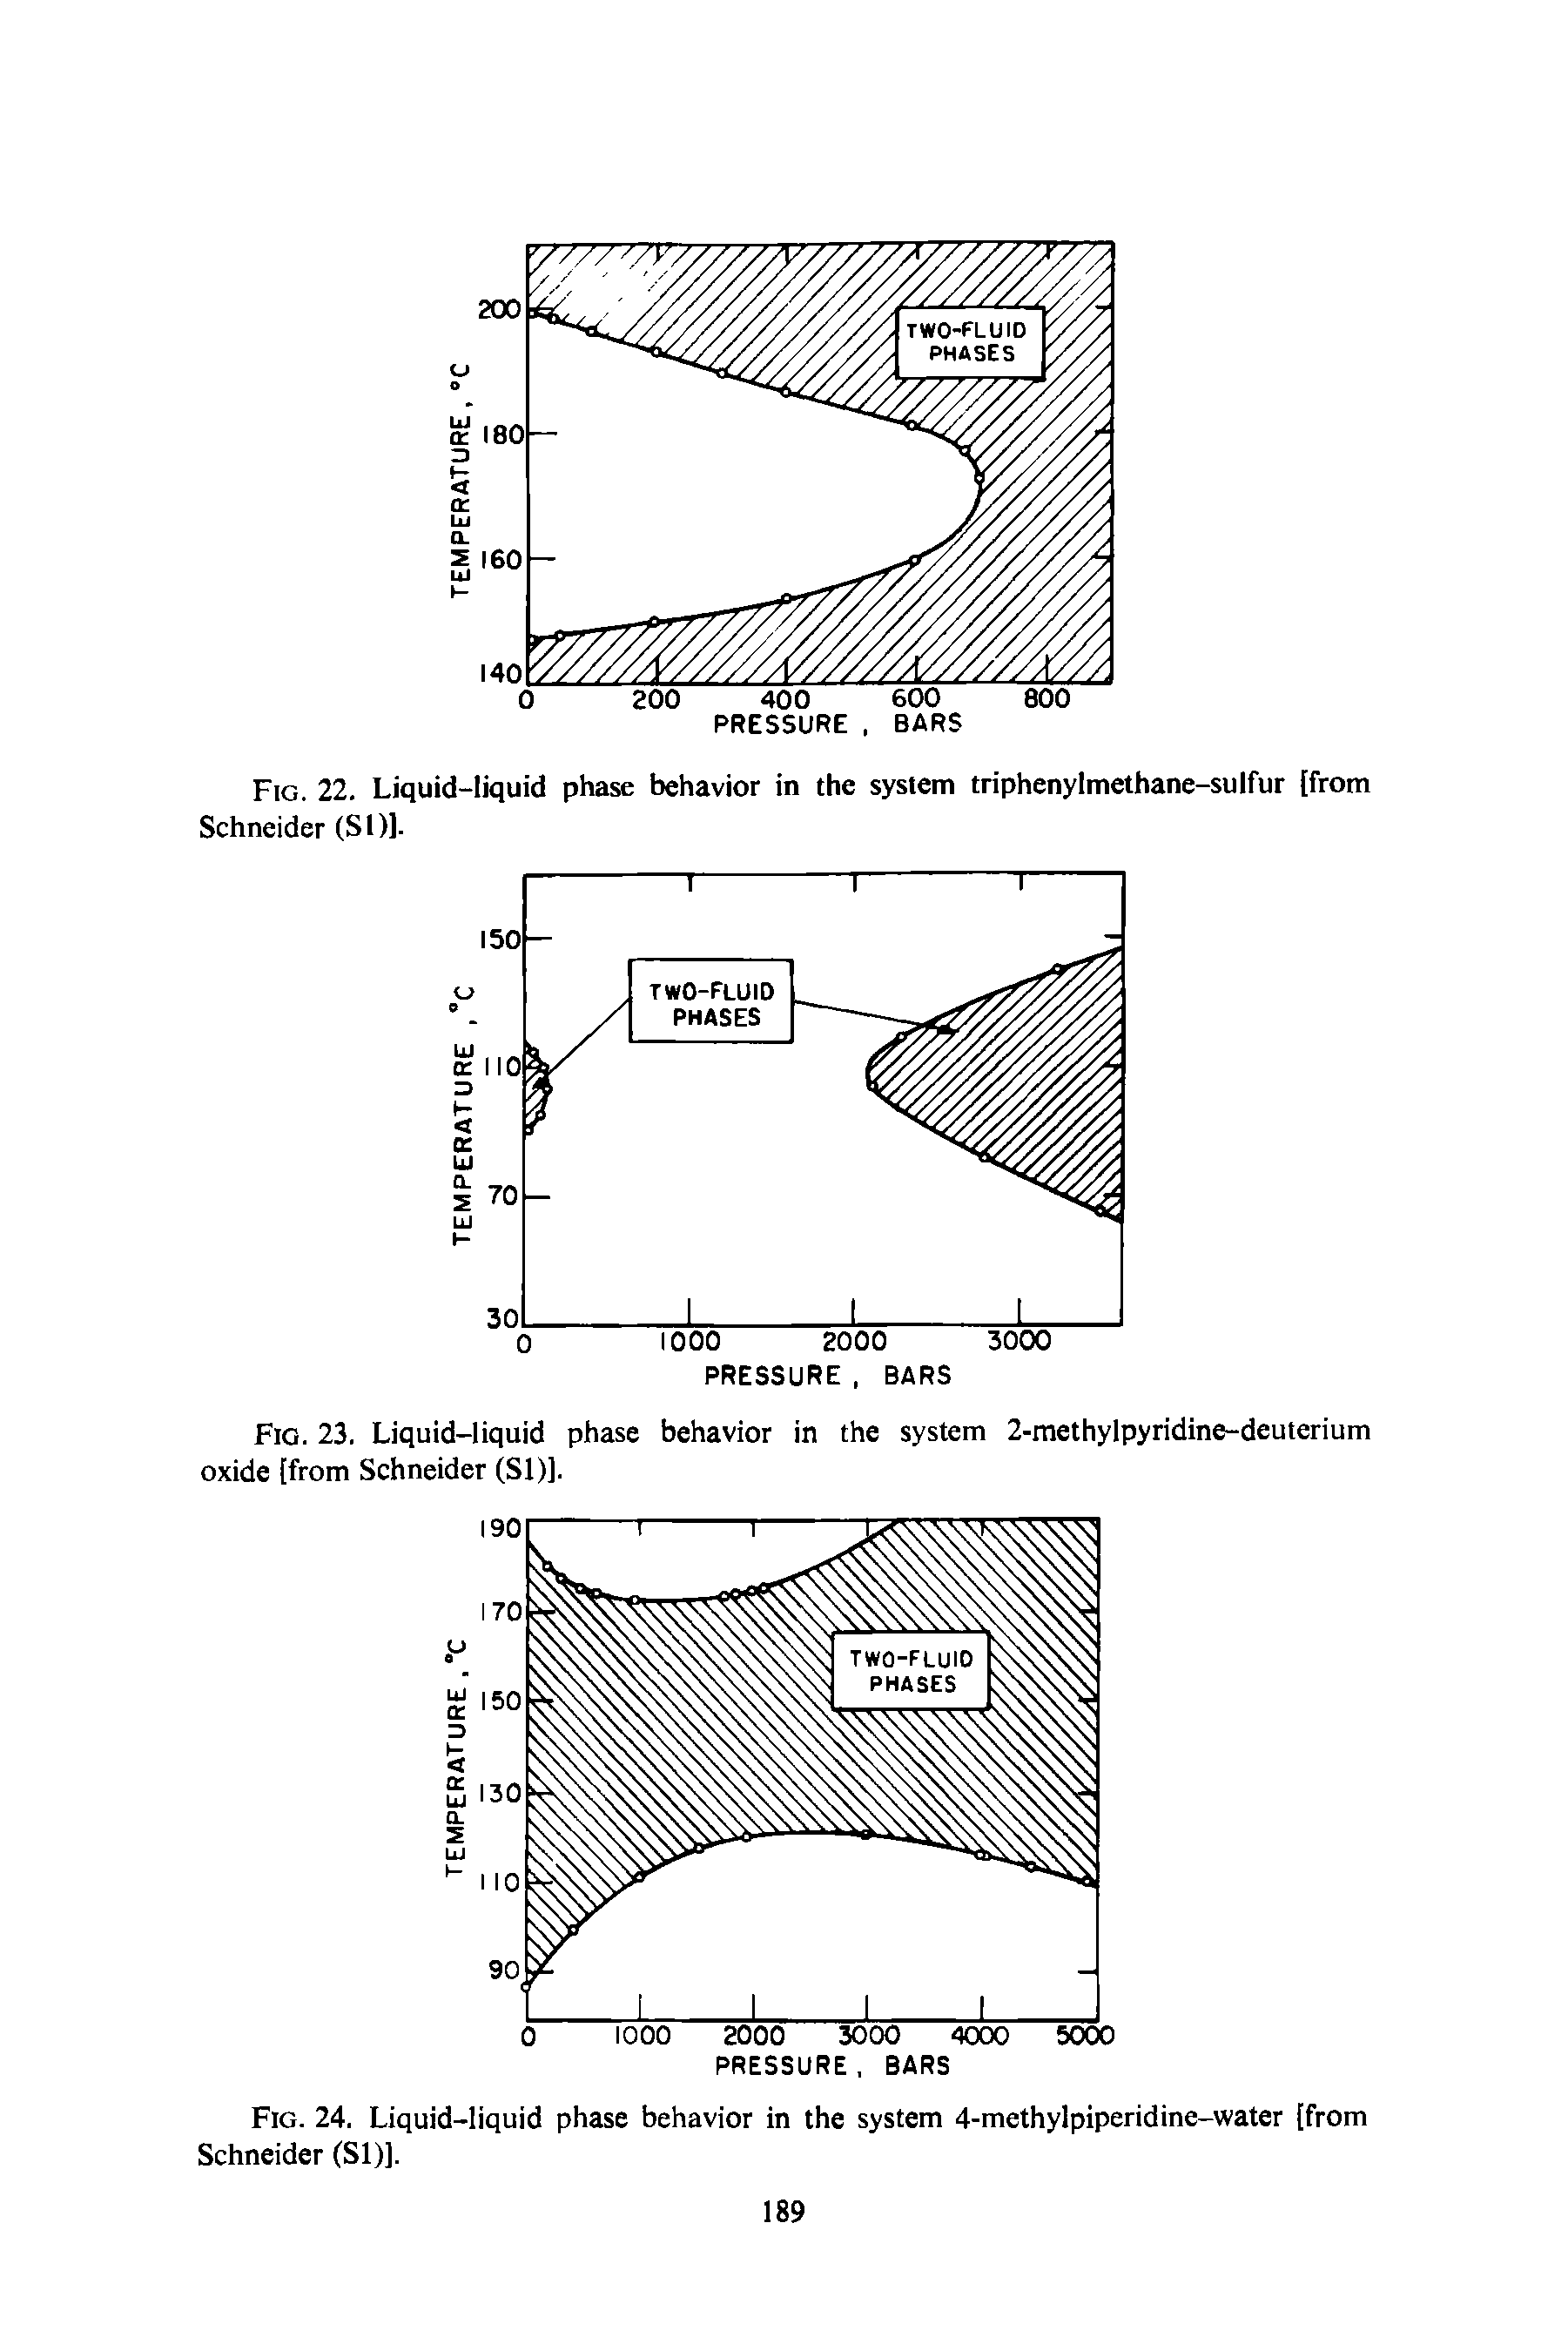 Fig. 23. Liquid-liquid phase behavior in the system 2-methylpyridine-deuterium oxide [from Schneider (SI)].